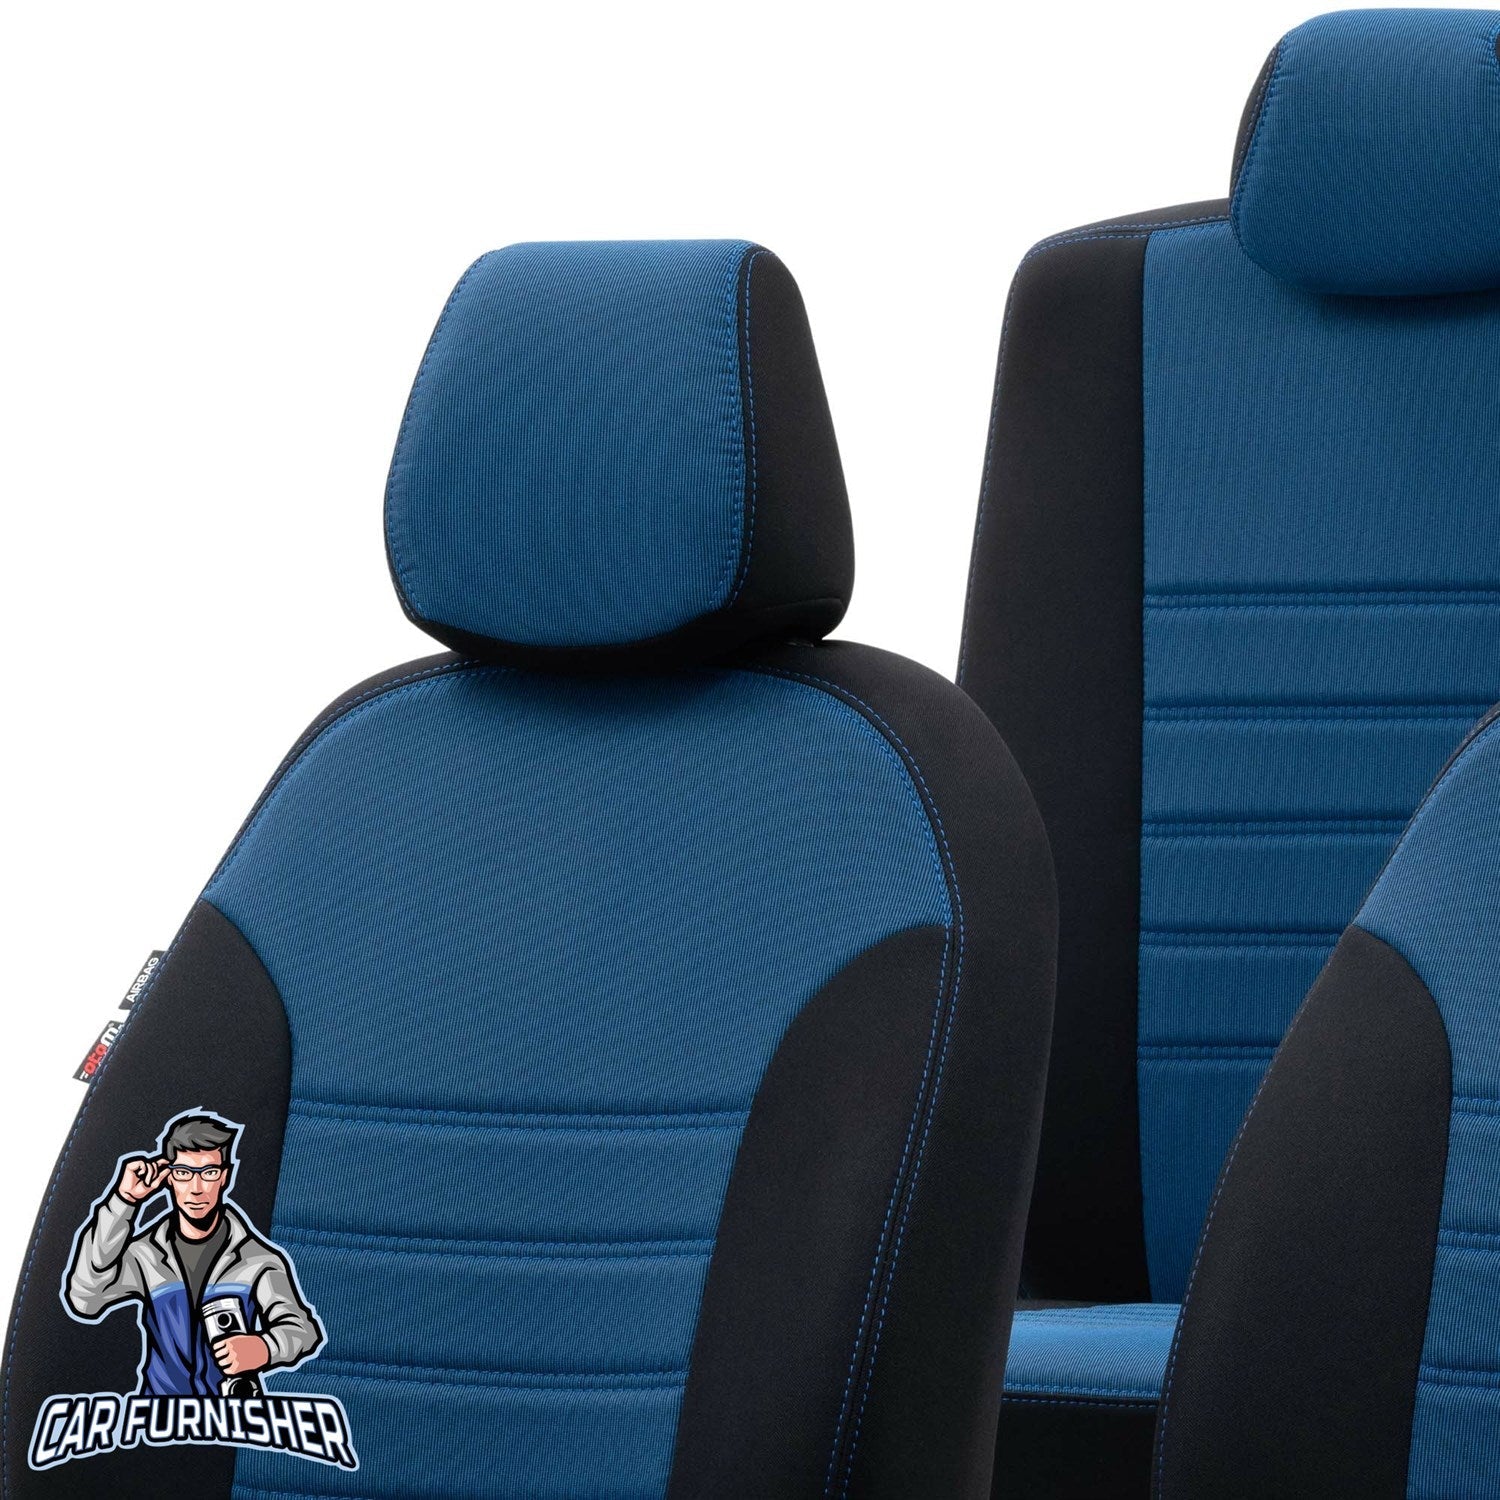 Volvo S80 Seat Cover Original Jacquard Design Blue Jacquard Fabric